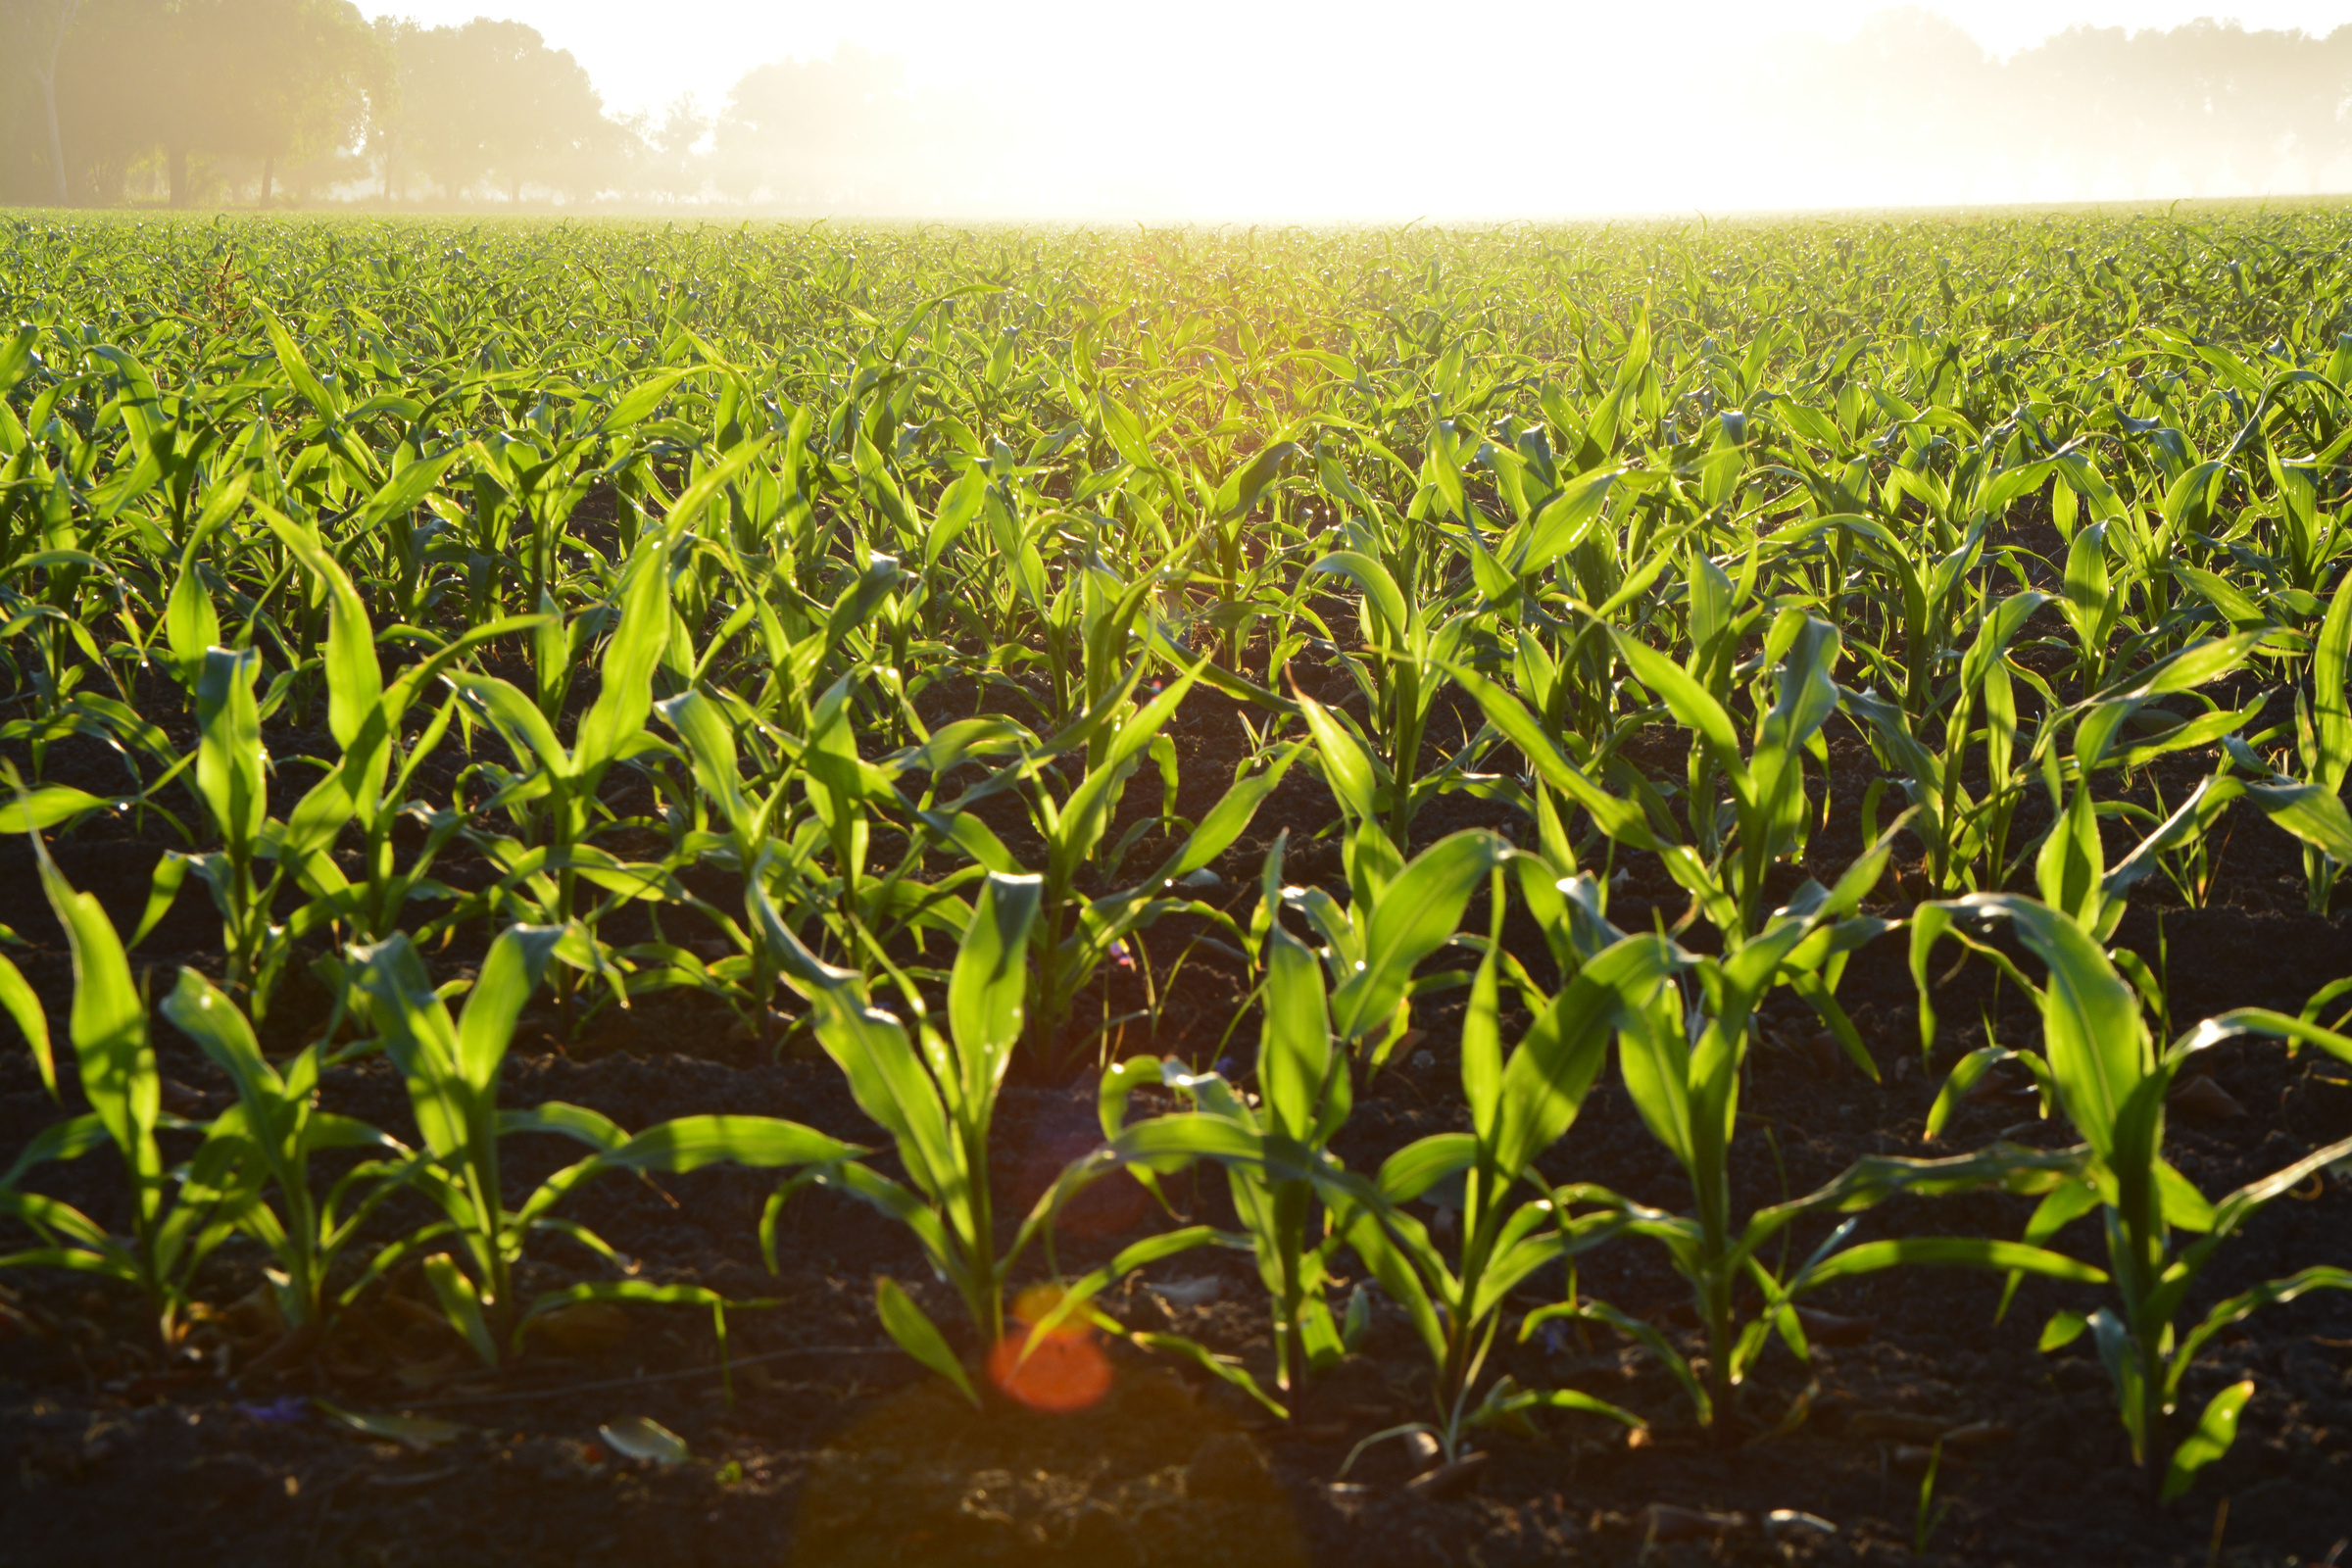 Corn Field during Daytime